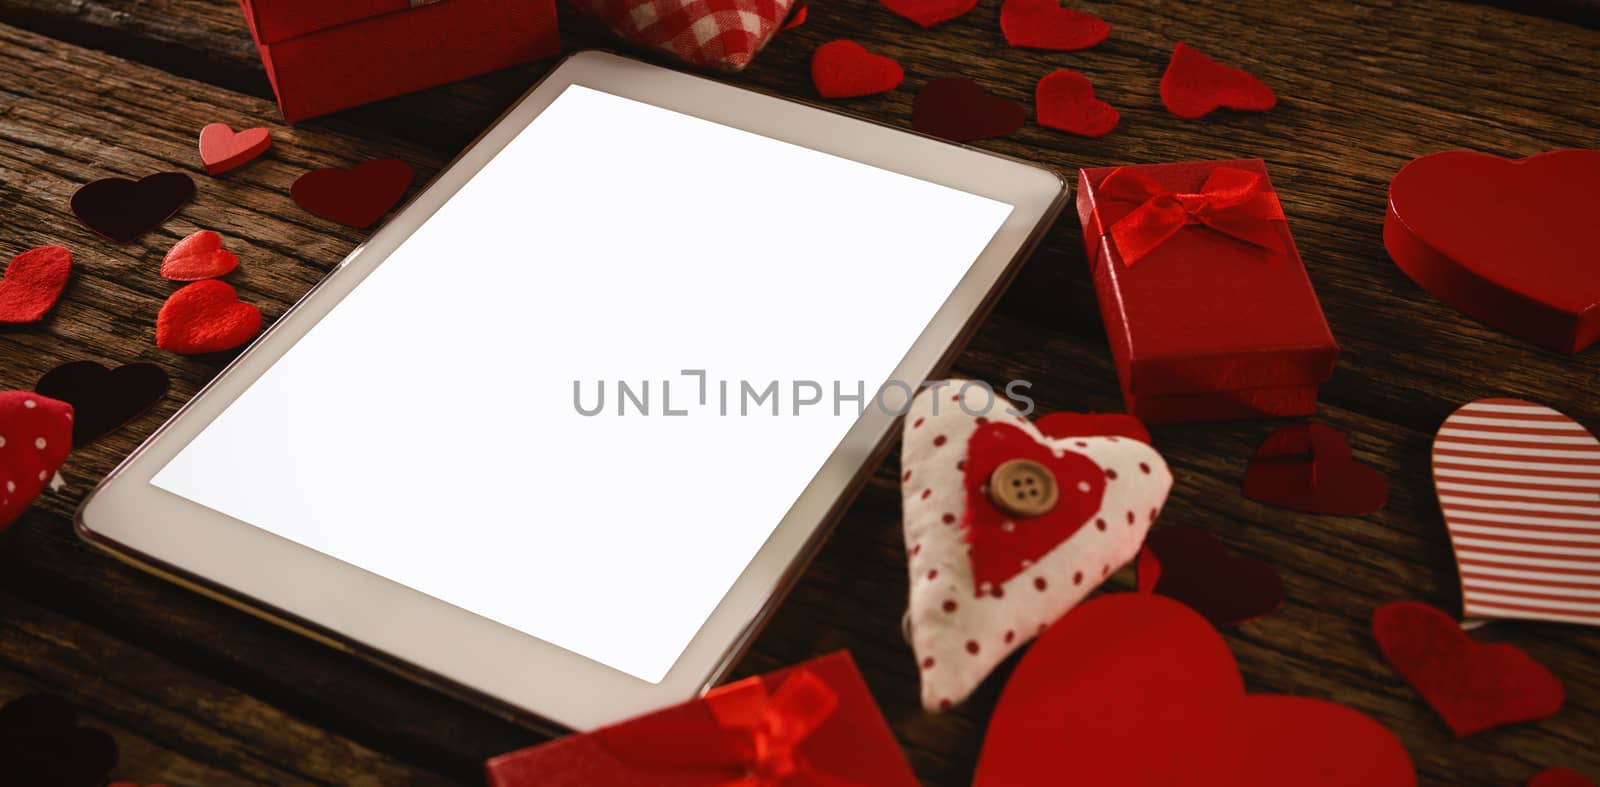 Digital tablet and valentine decorations by Wavebreakmedia